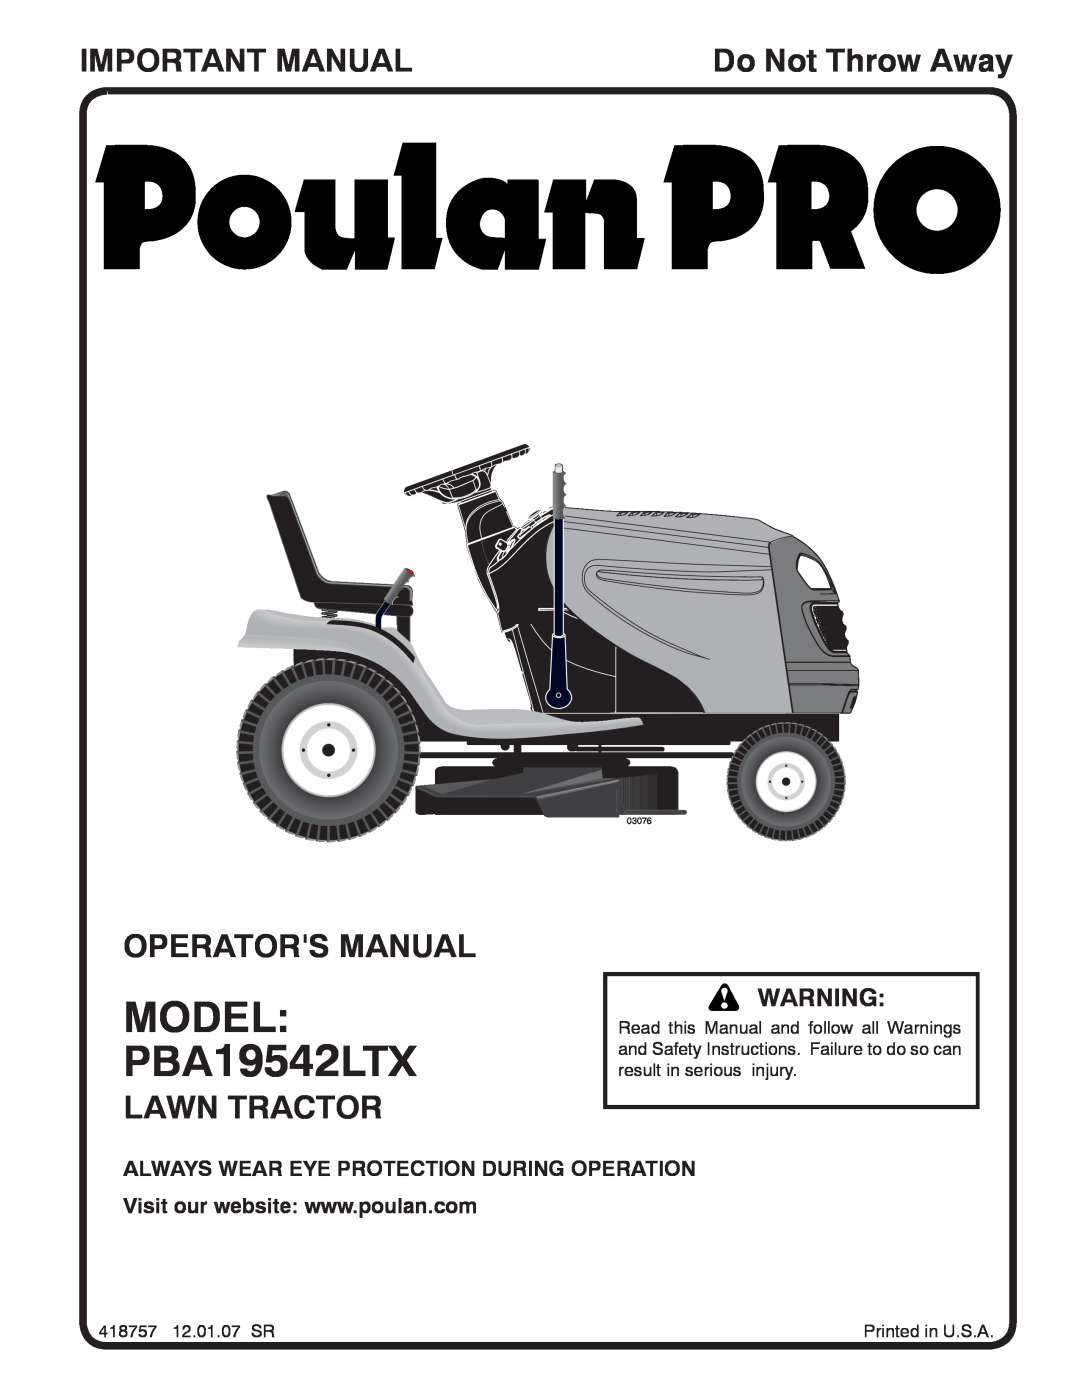 Poulan 418757 manual MODEL PBA19542LTX, Important Manual, Operators Manual, Lawn Tractor, Do Not Throw Away, 03076 